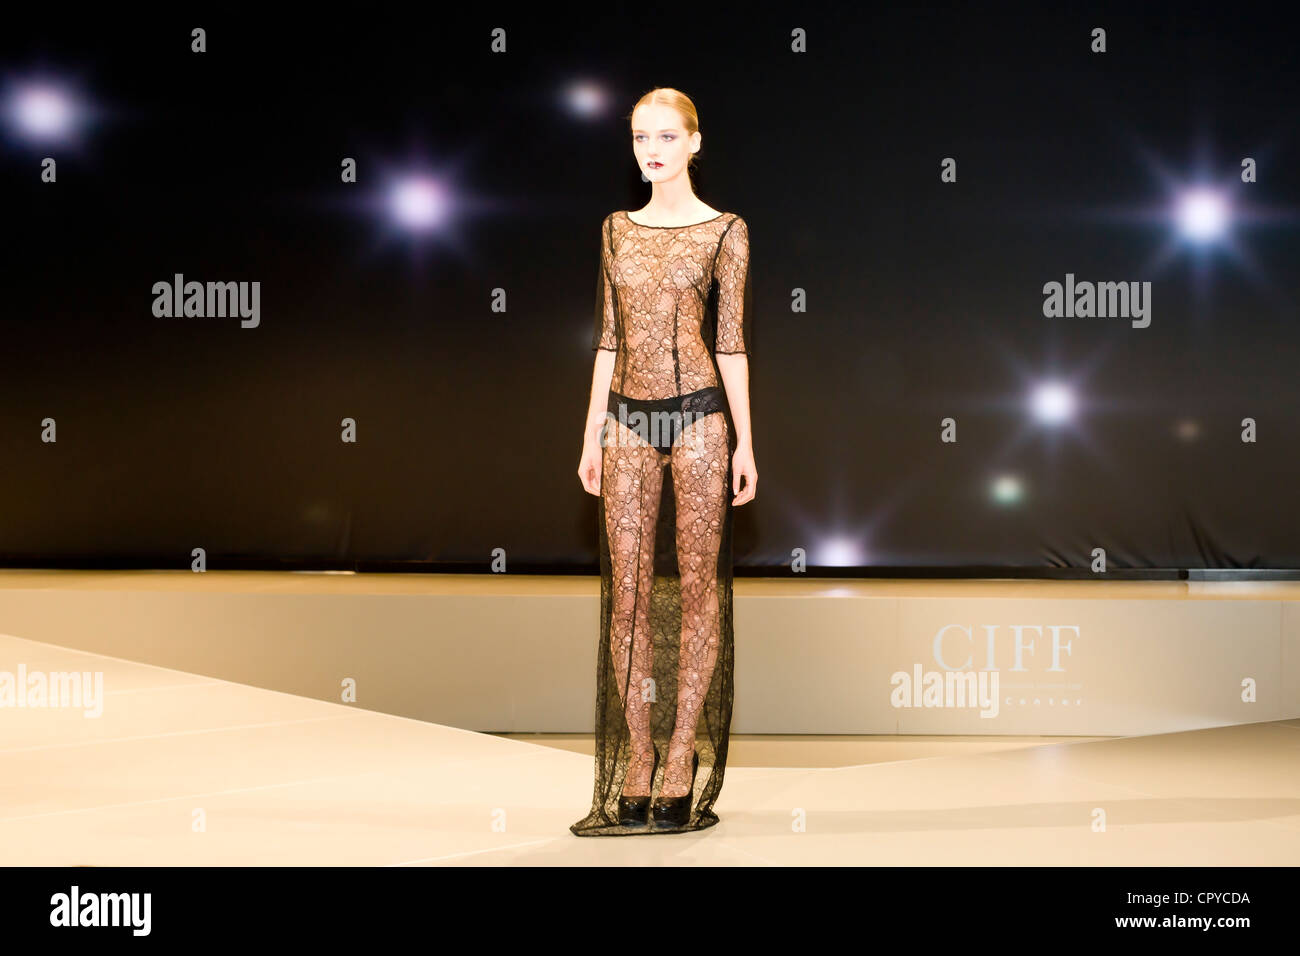 Young woman showing transparent dress at Copenhagen International Fashion  Fair Stock Photo - Alamy